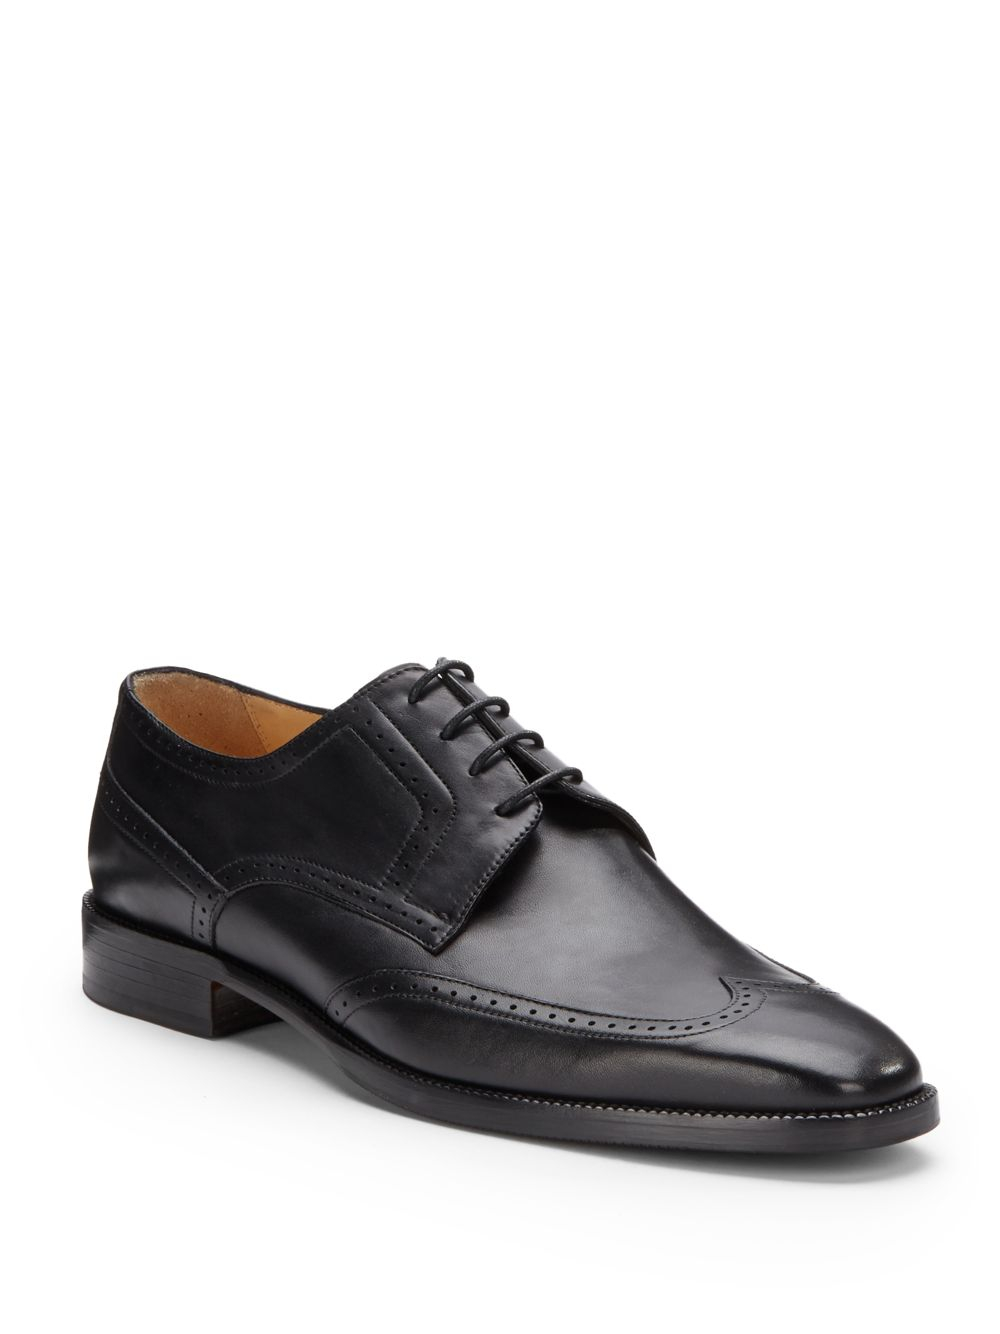 Lyst - Saks Fifth Avenue Black Label Leather Wingtip Shoes in Black for Men